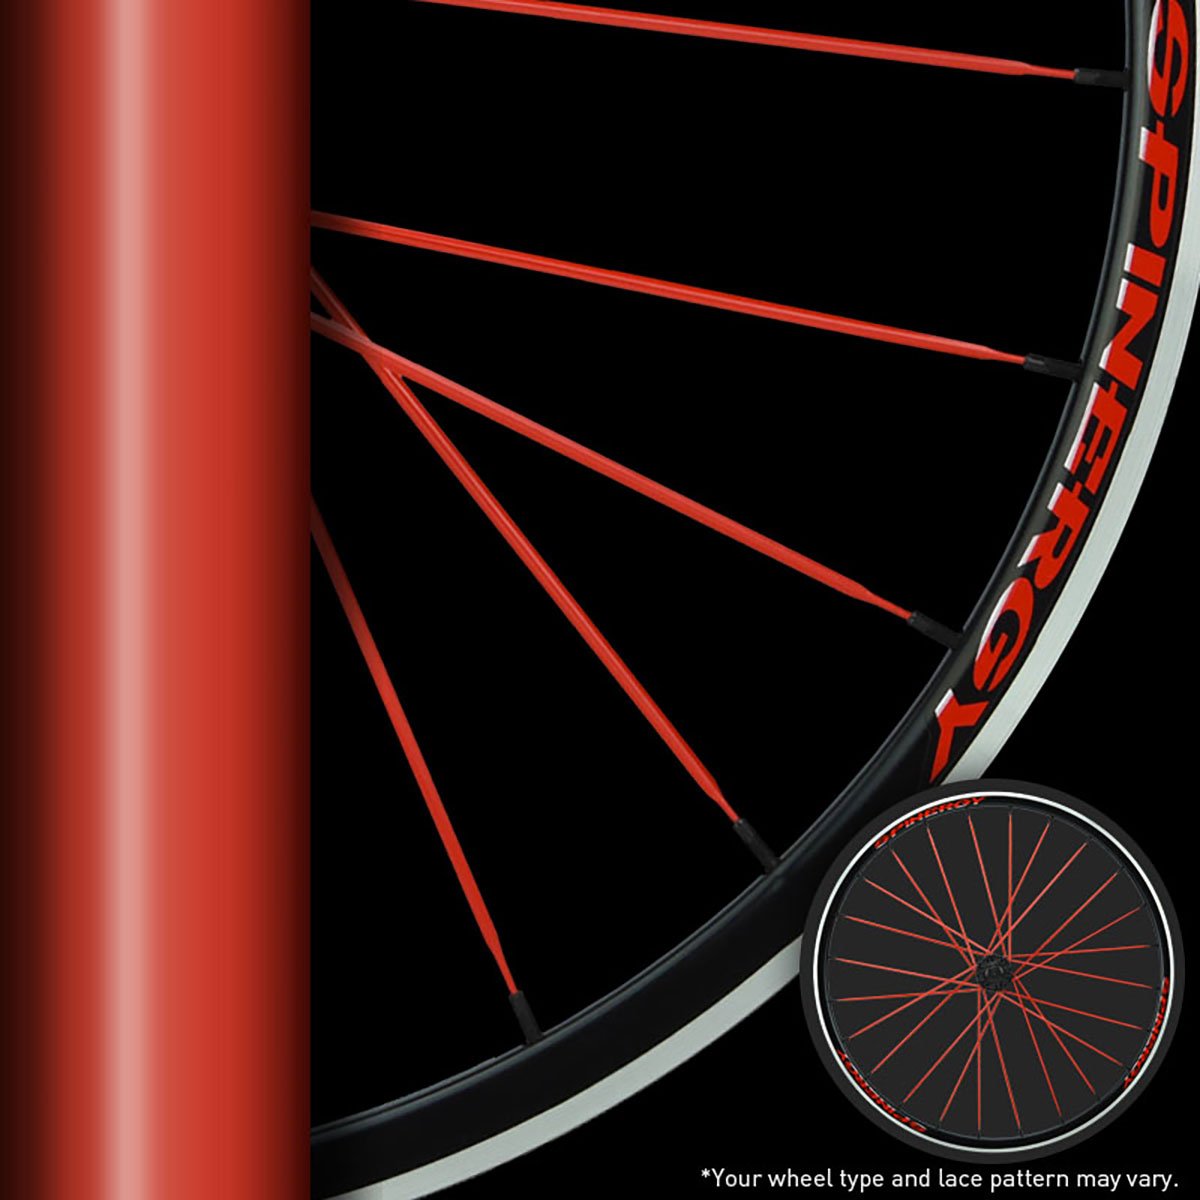 SPINERGY - Z32 Centerlock 700c, Front Bicycle Wheel - Road, Climbing, Sprinting - 2021 Model w/ "44" Hub